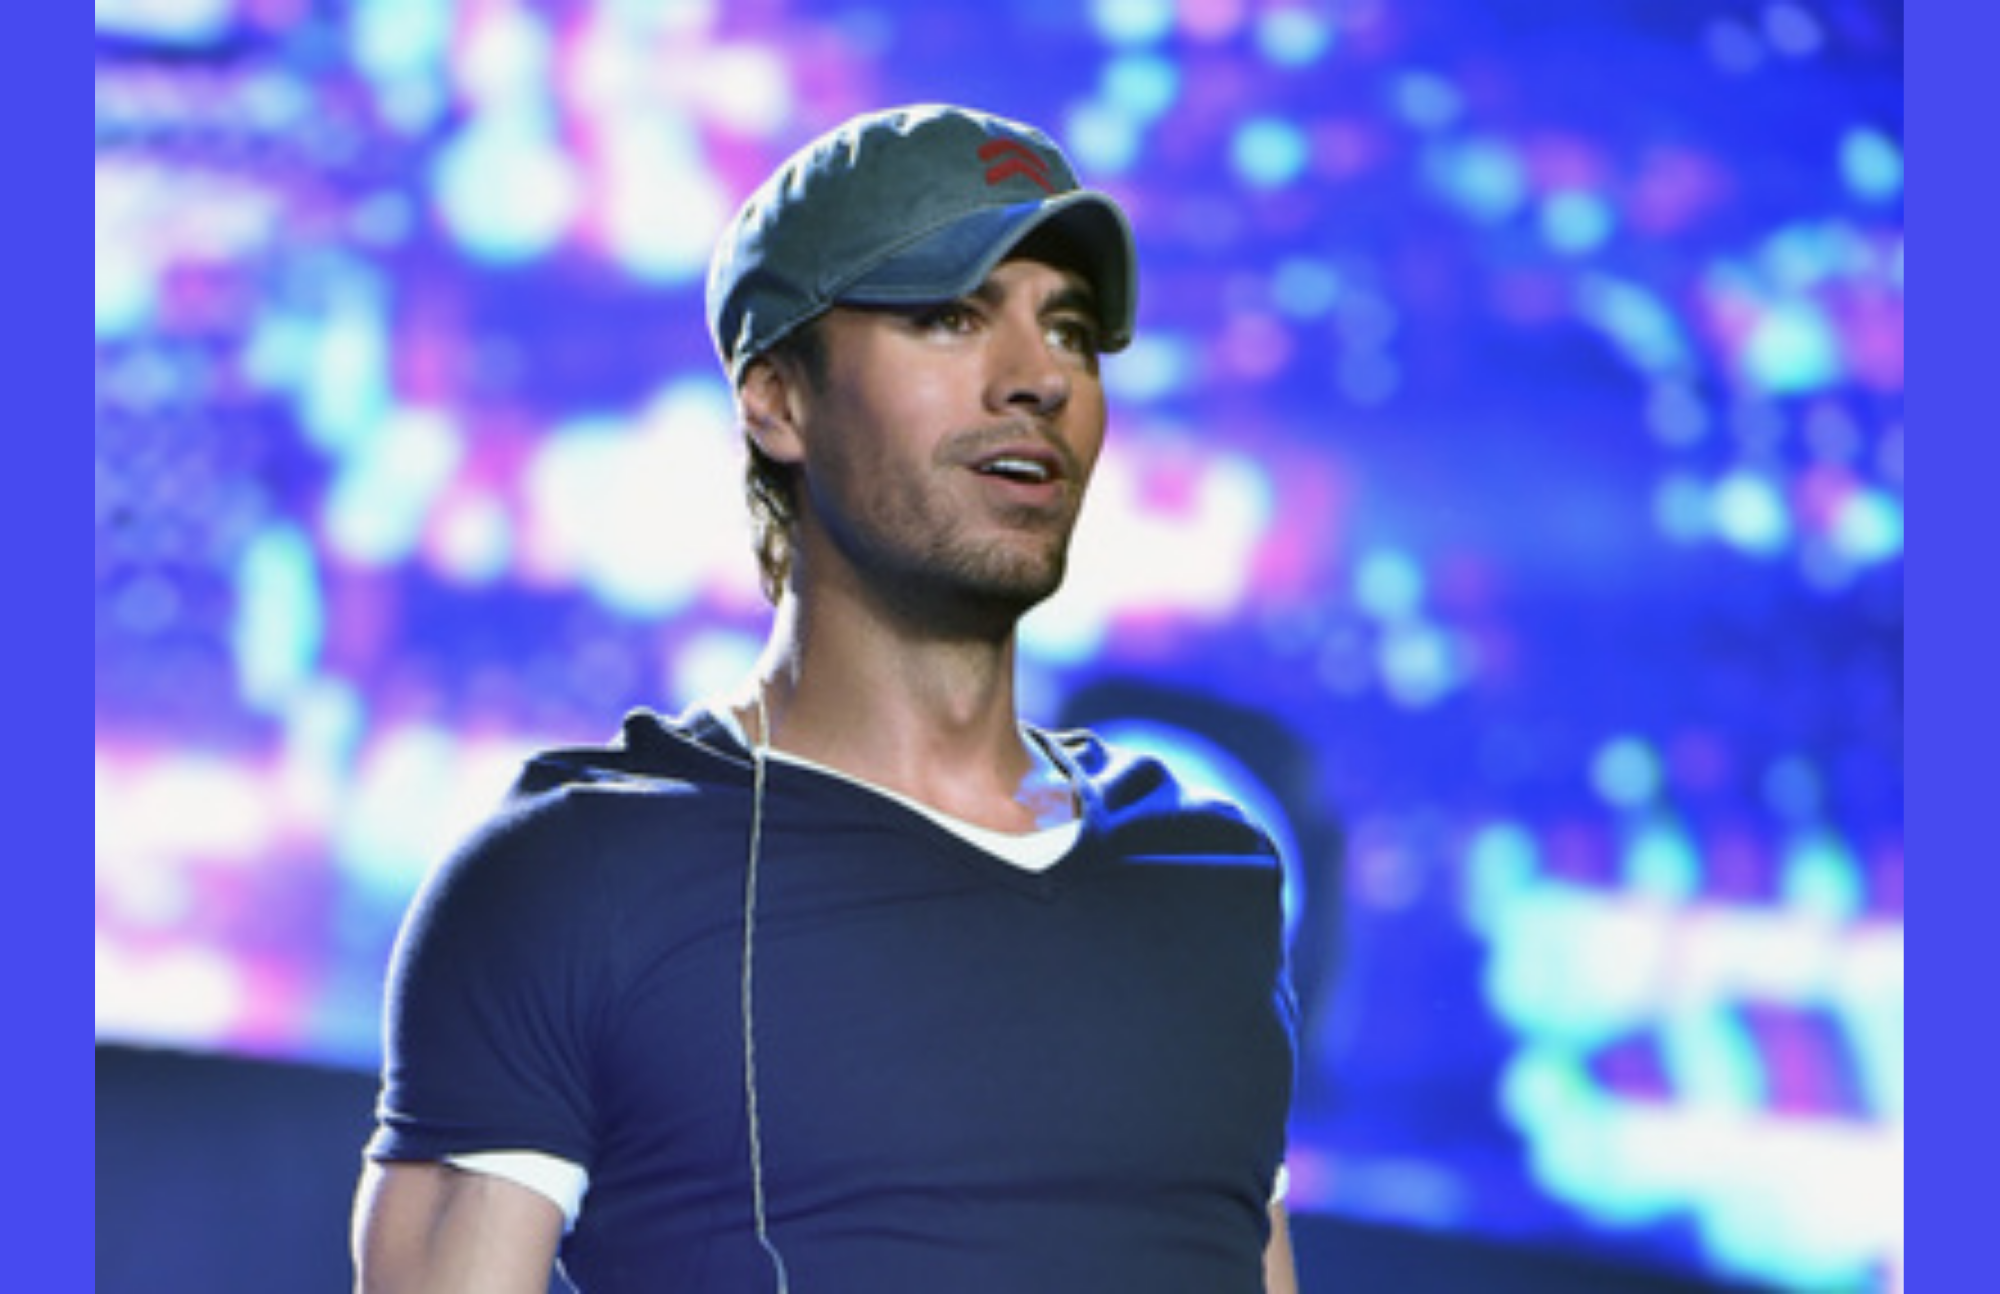 Enrique Iglesias performs in a navy blue shirt and a cap